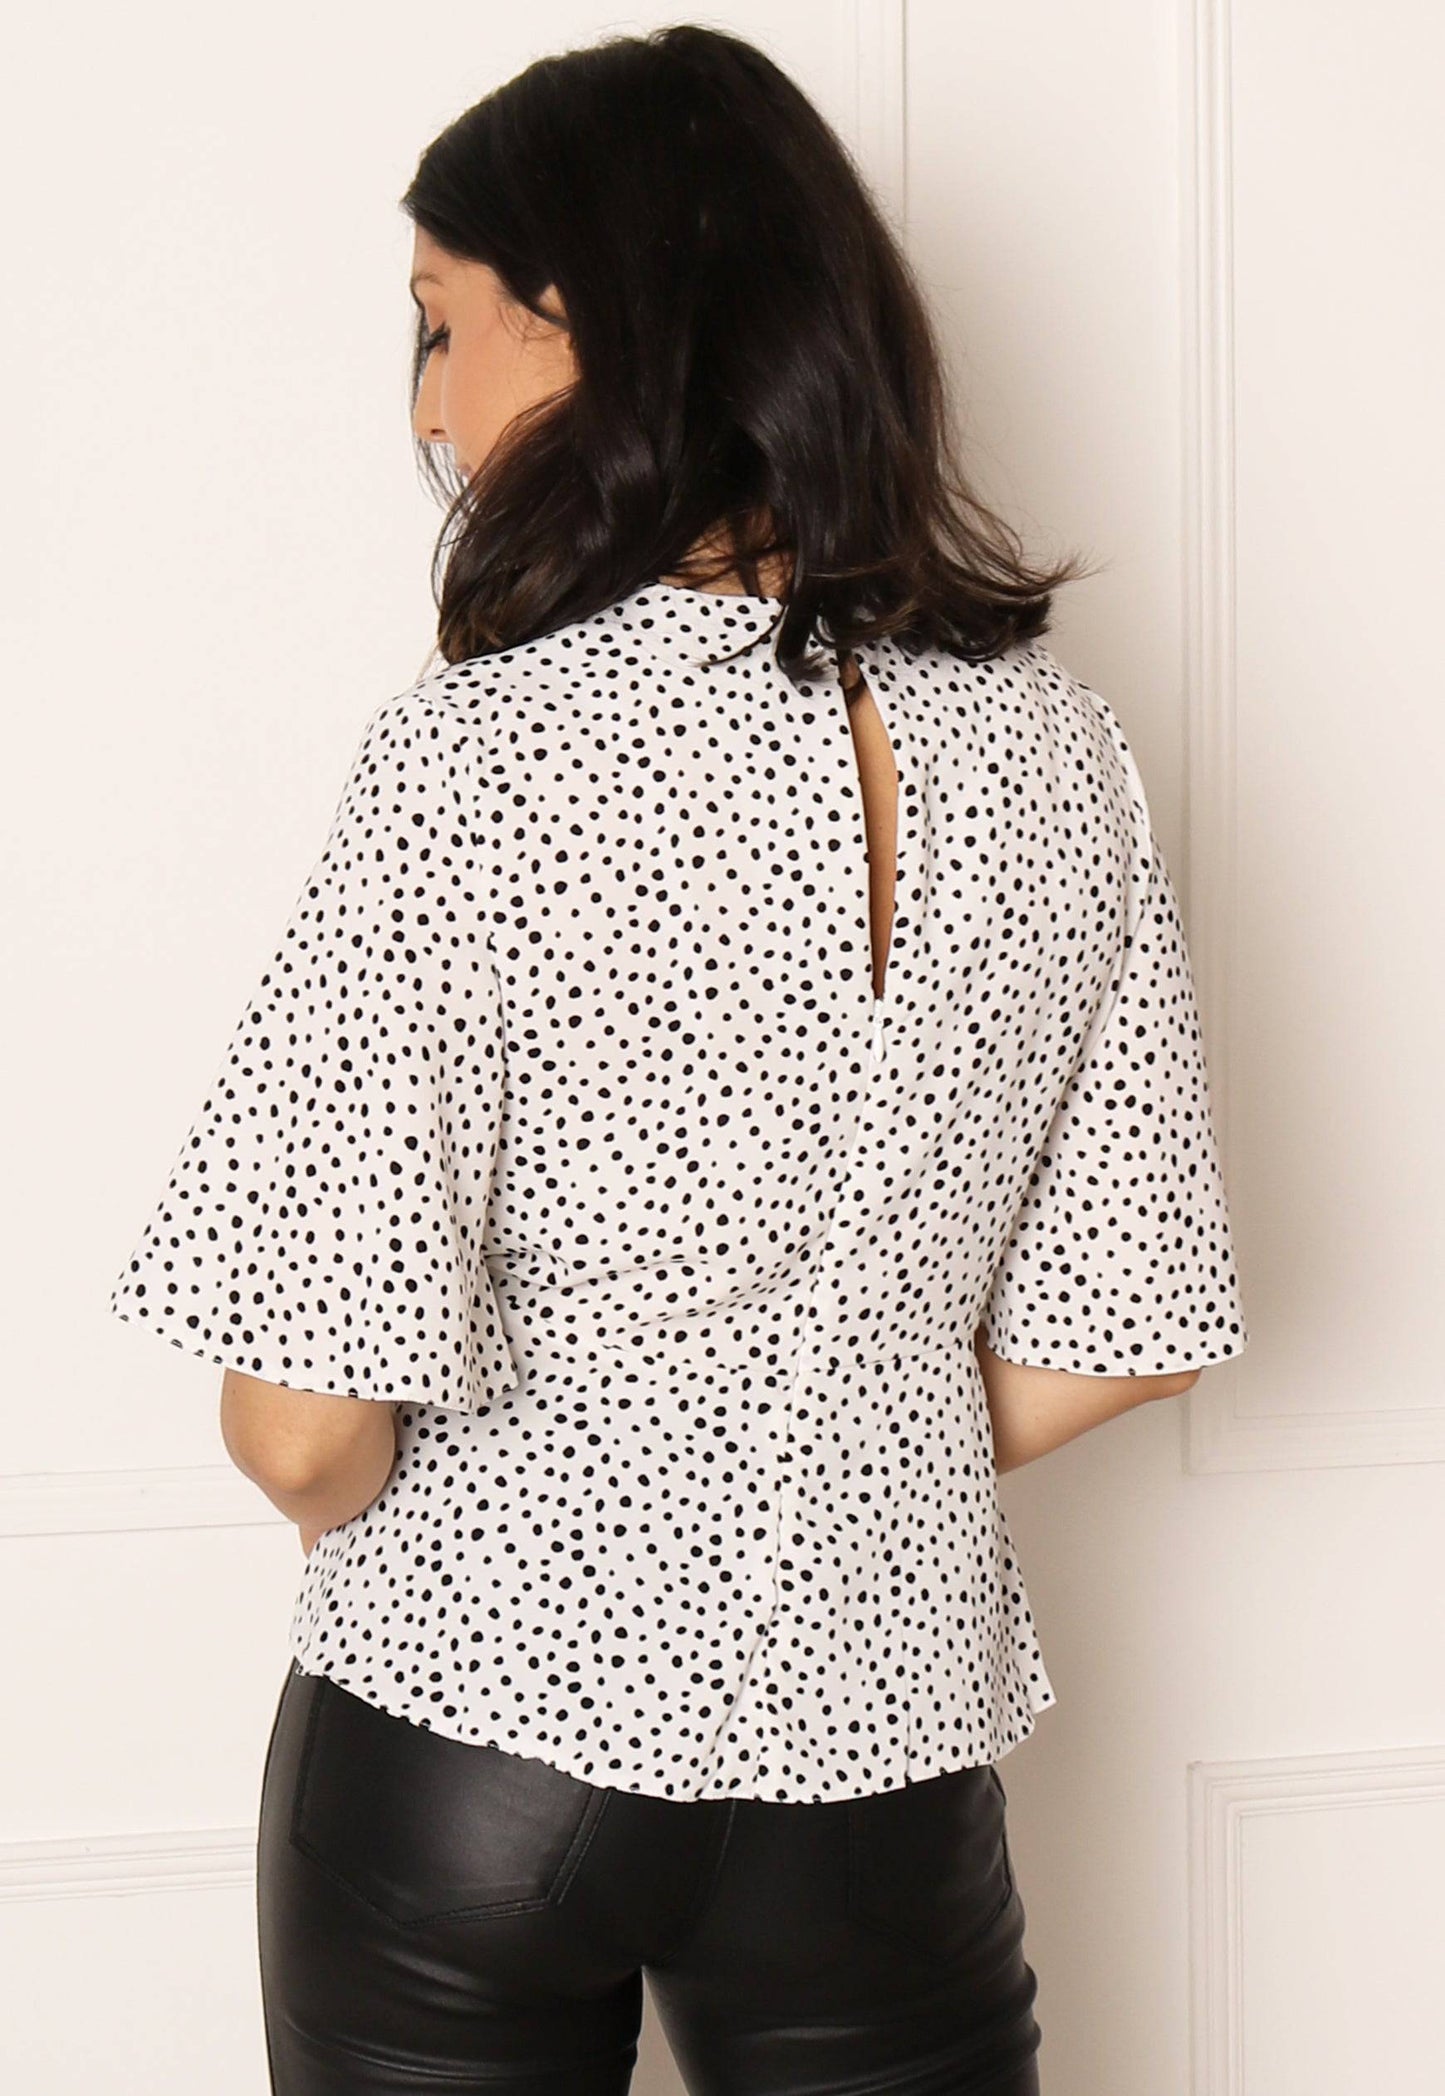 
                  
                    Kimono Sleeve Knot Detail Blouse Top in White & Black - One Nation Clothing
                  
                